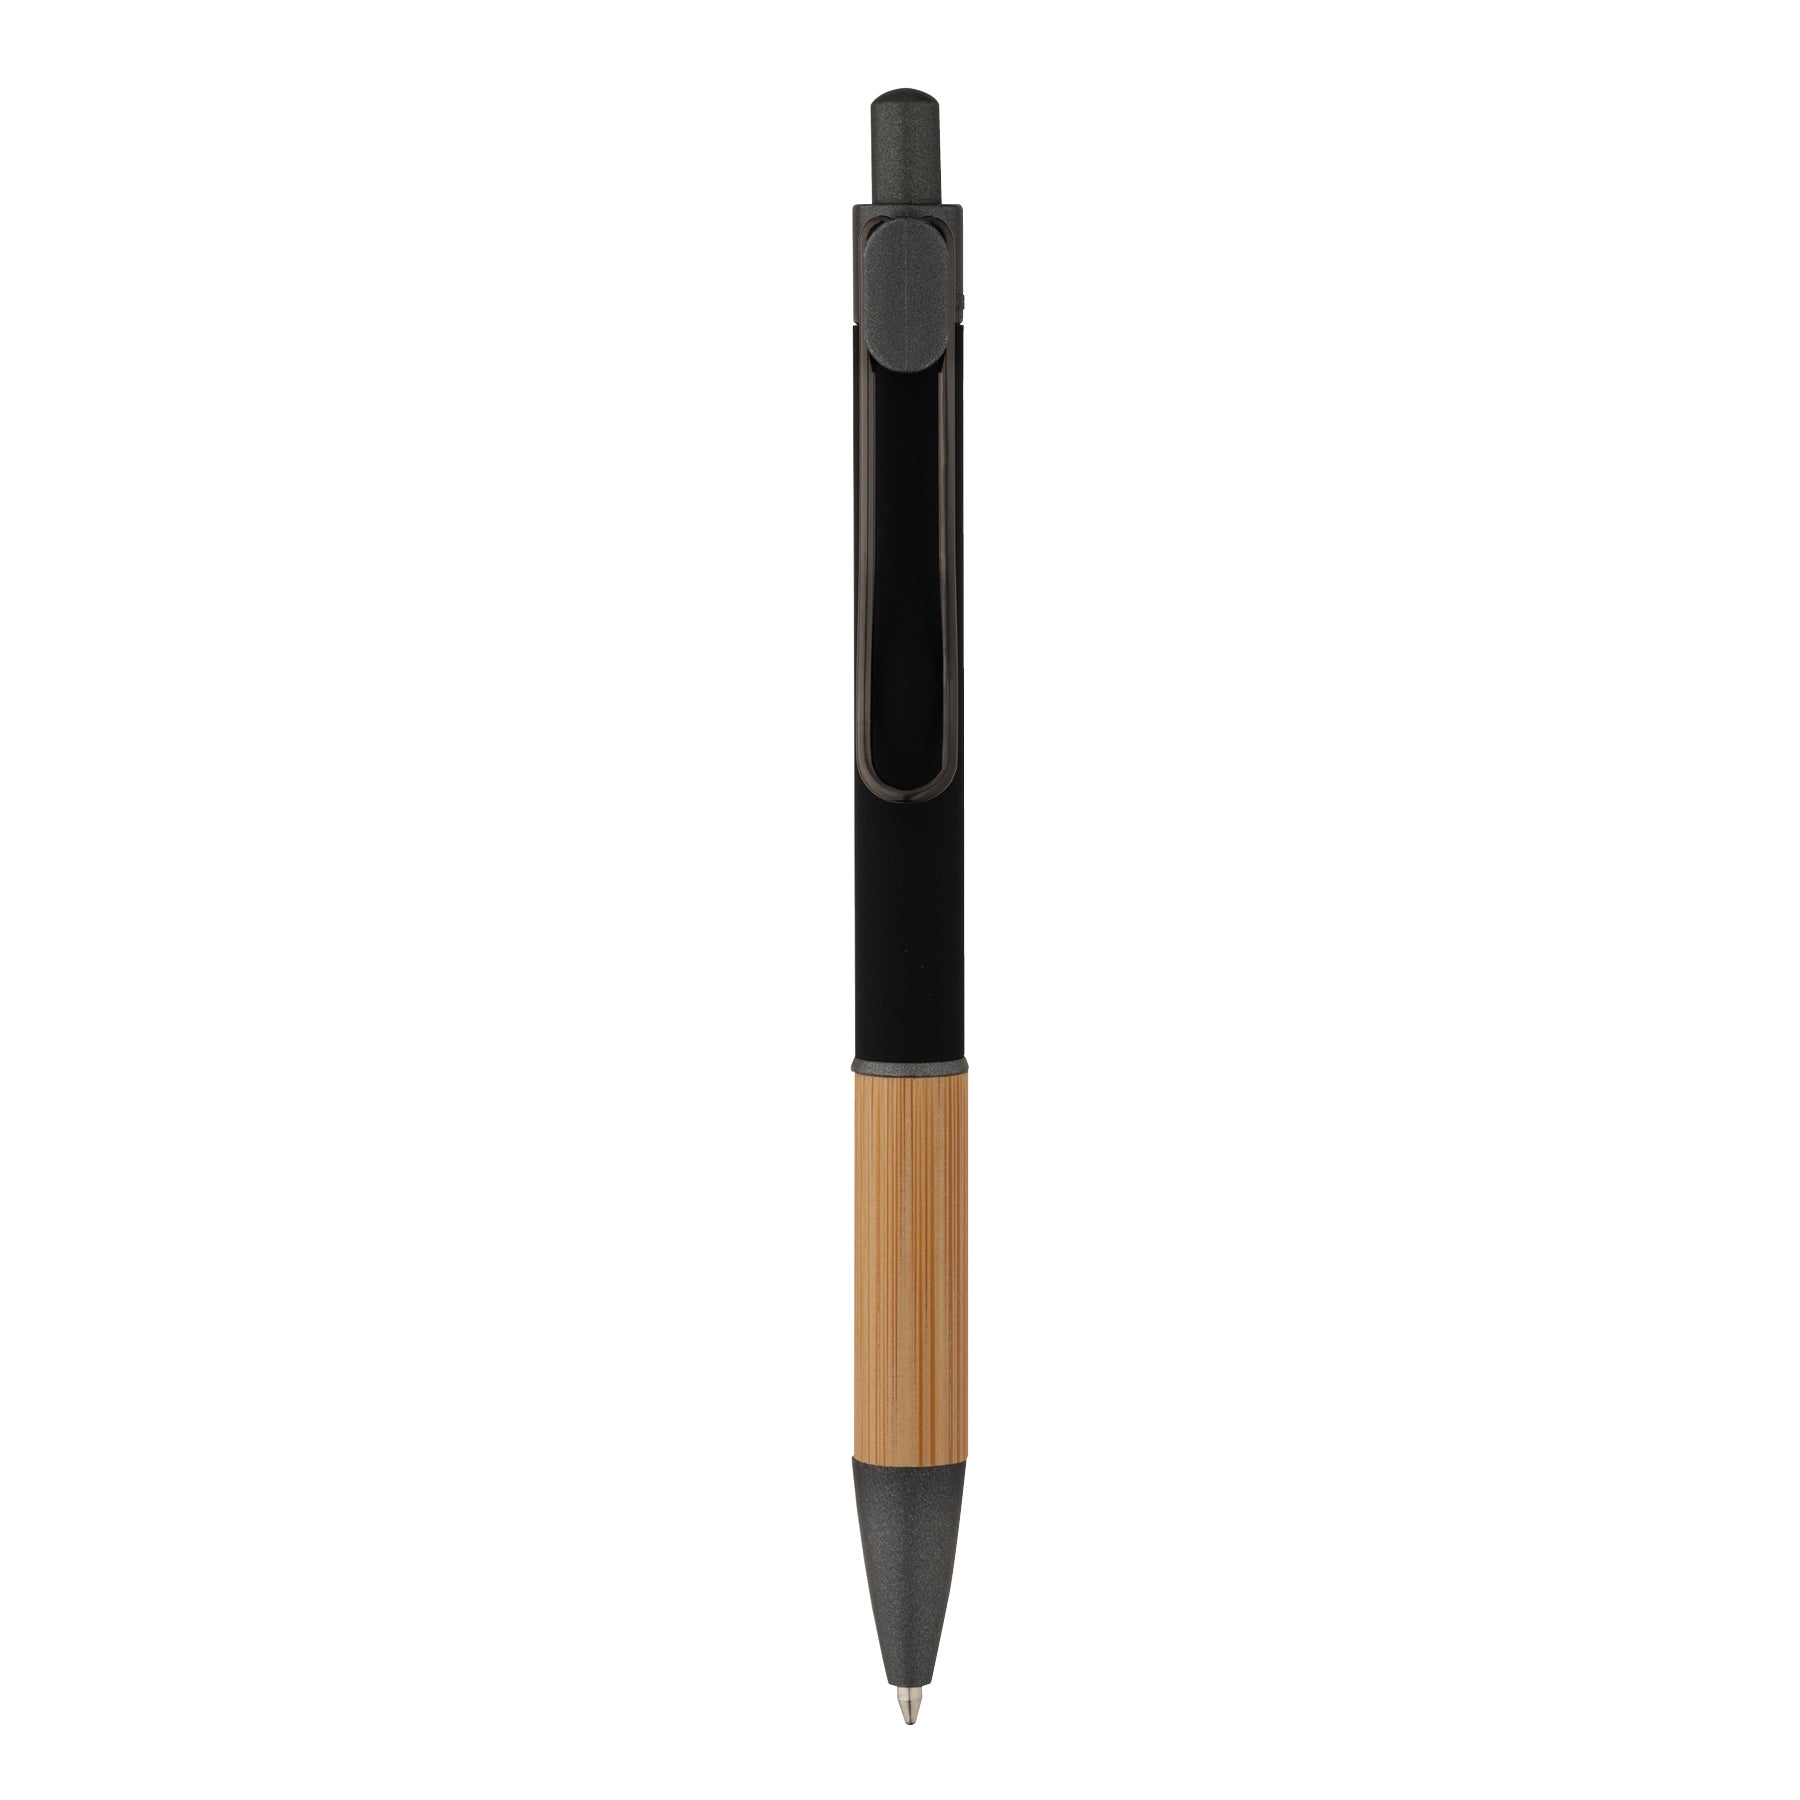 Customized manoa ballpoint bamboo pen in black.